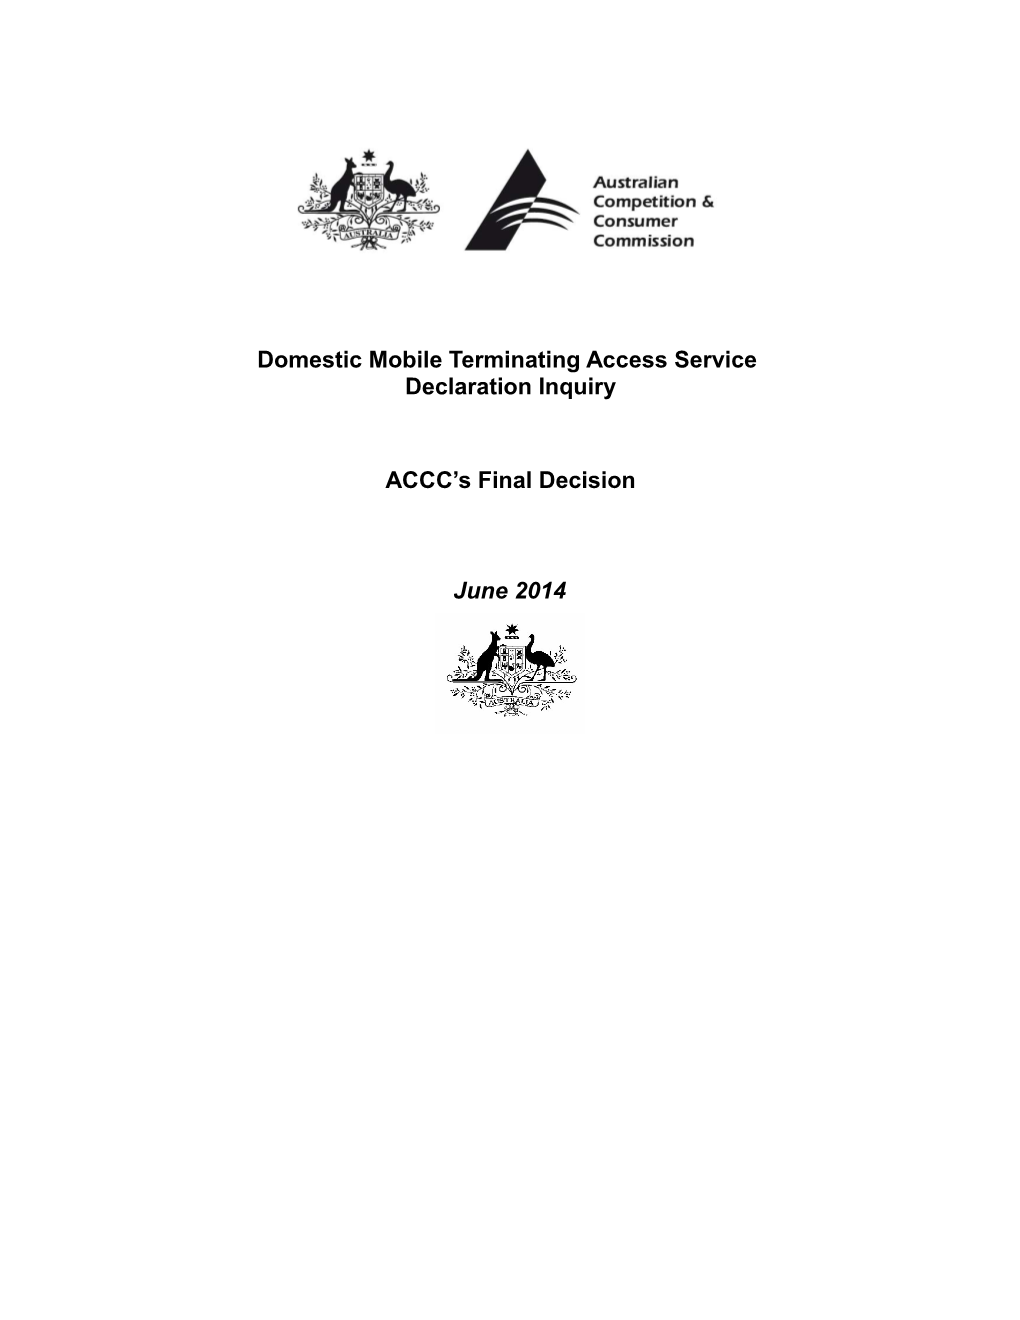 Domestic Mobile Terminating Access Service Declaration Inquiry